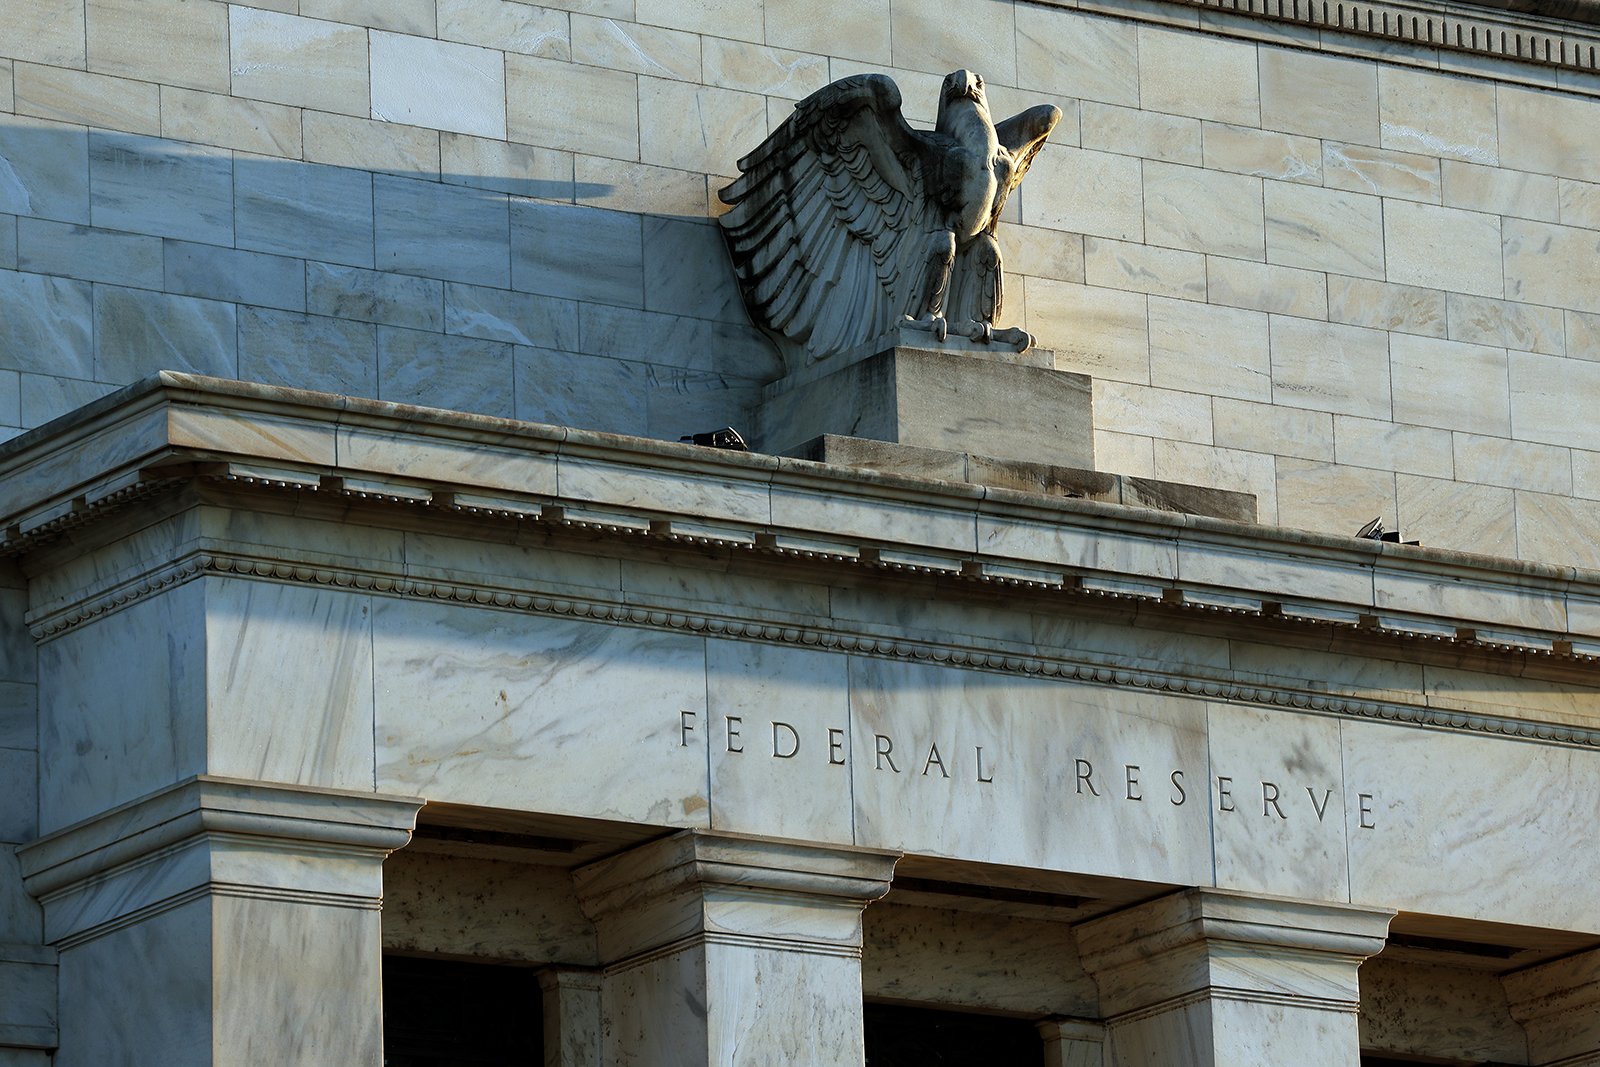 Live updates: Fed raises rates by a quarter point